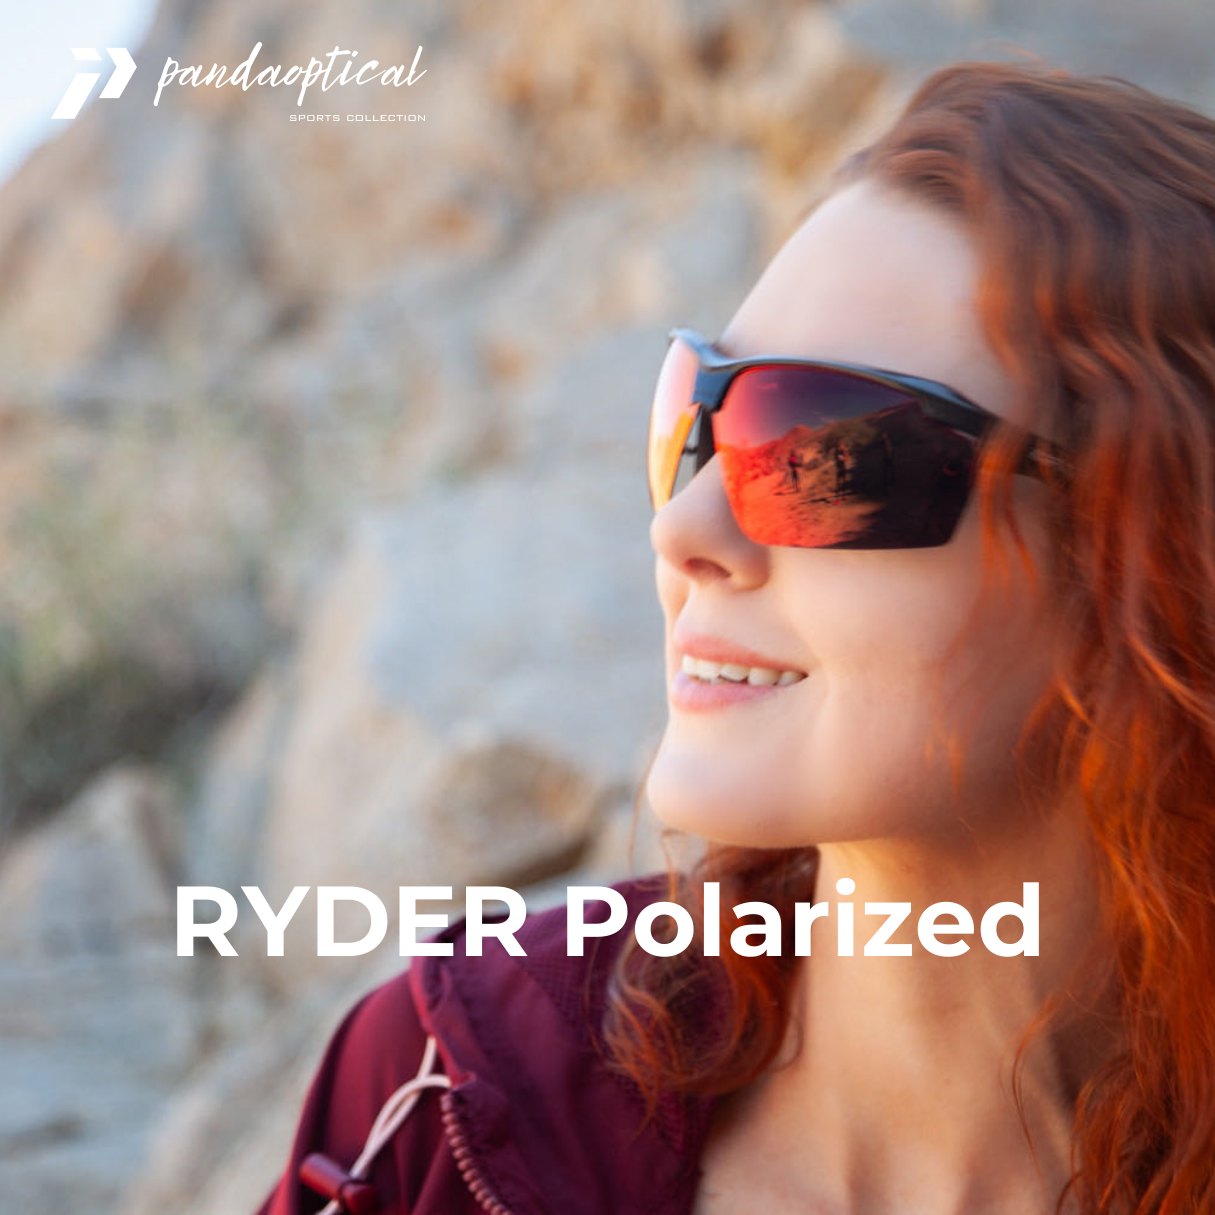 Ryder Polarized